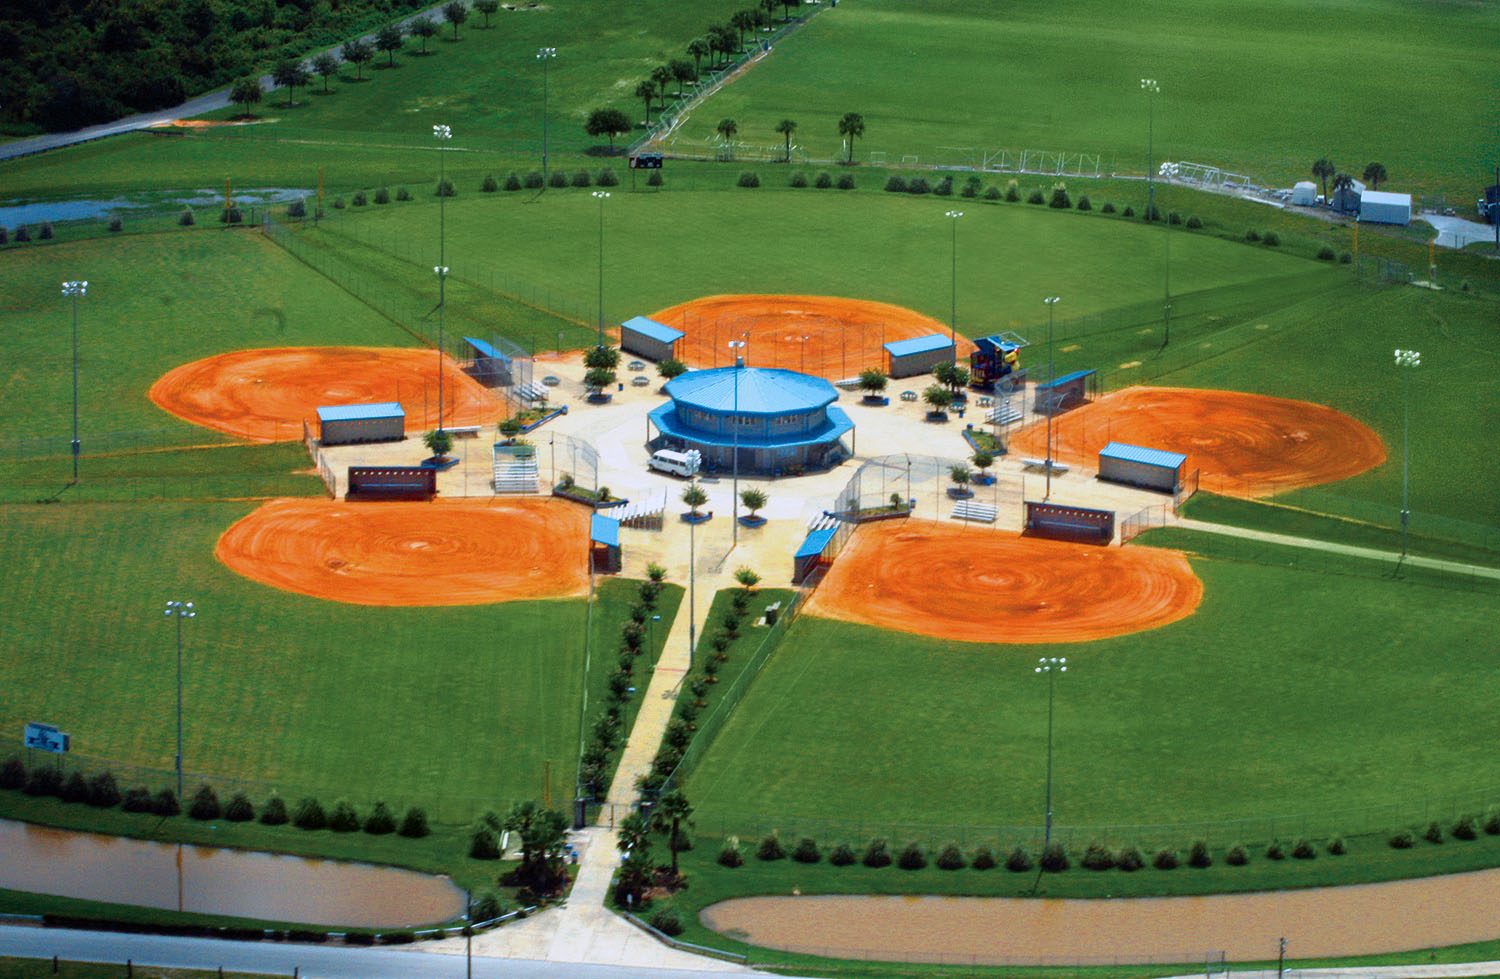 Auburndale Softball Complex